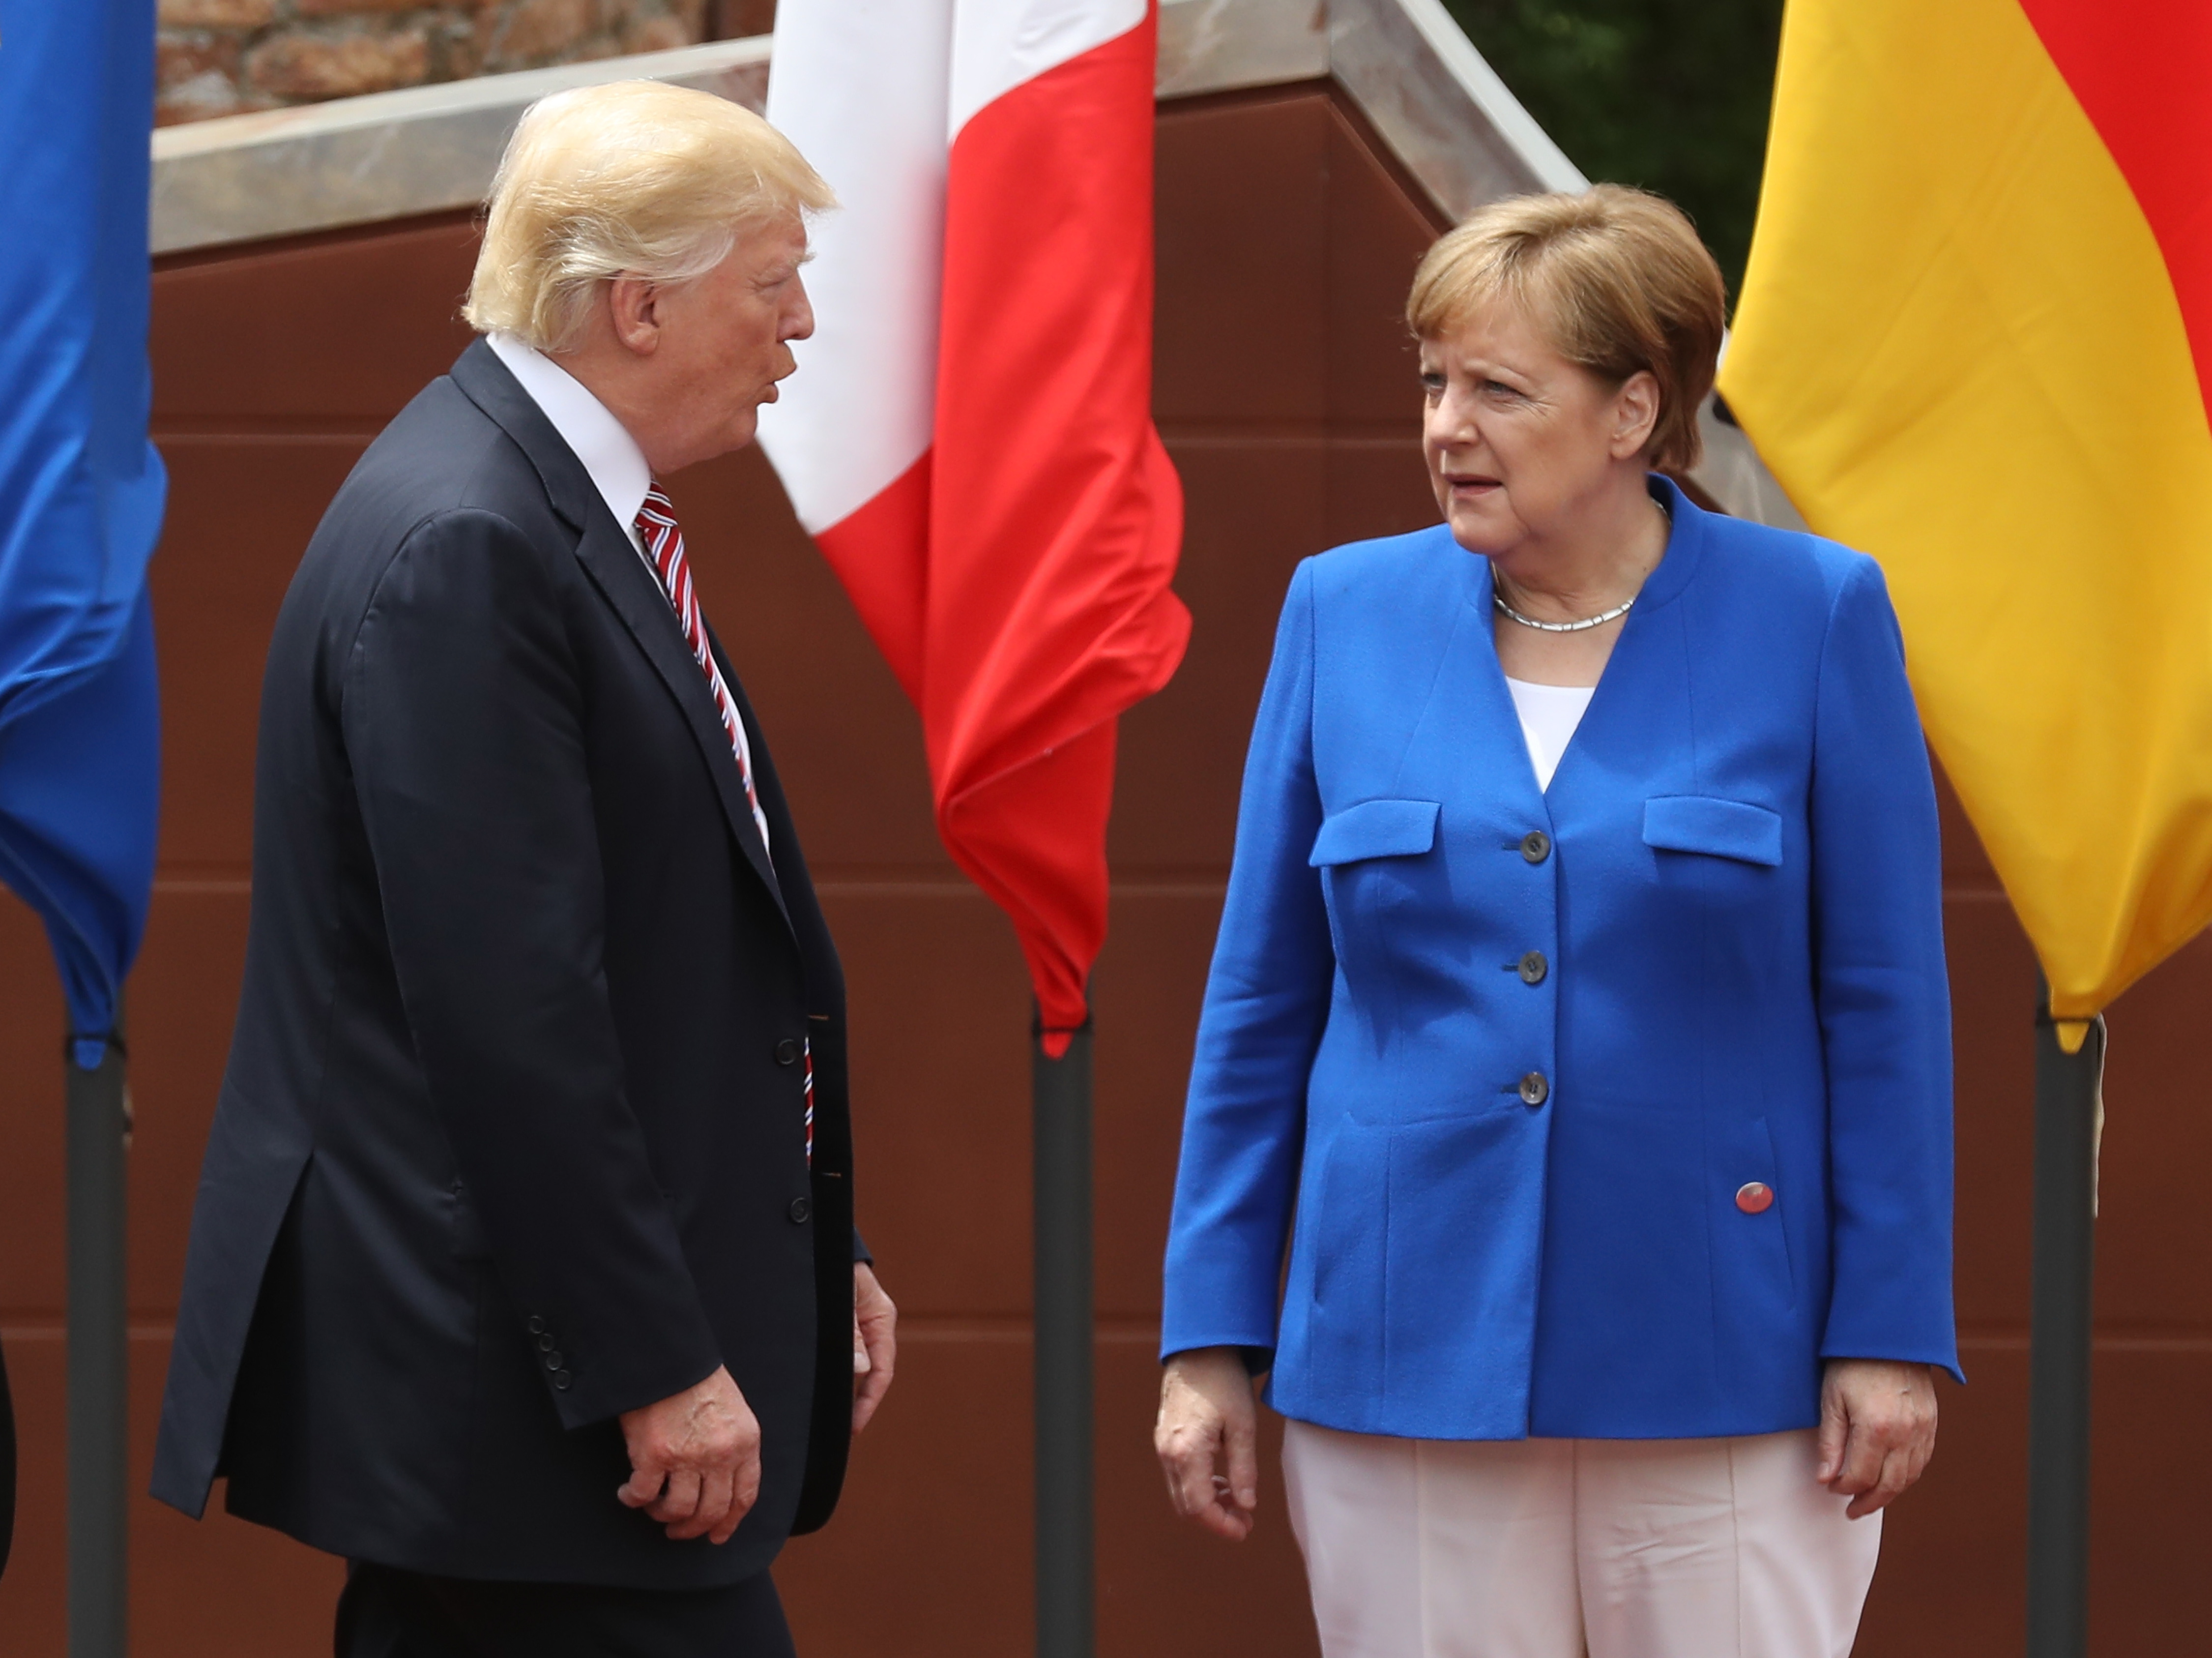 Angela Merkel and Donald Trump at the G7 Taormina summit on the Italian island of Sicily, May 26, 2017. (Sean Gallup—Getty Images)